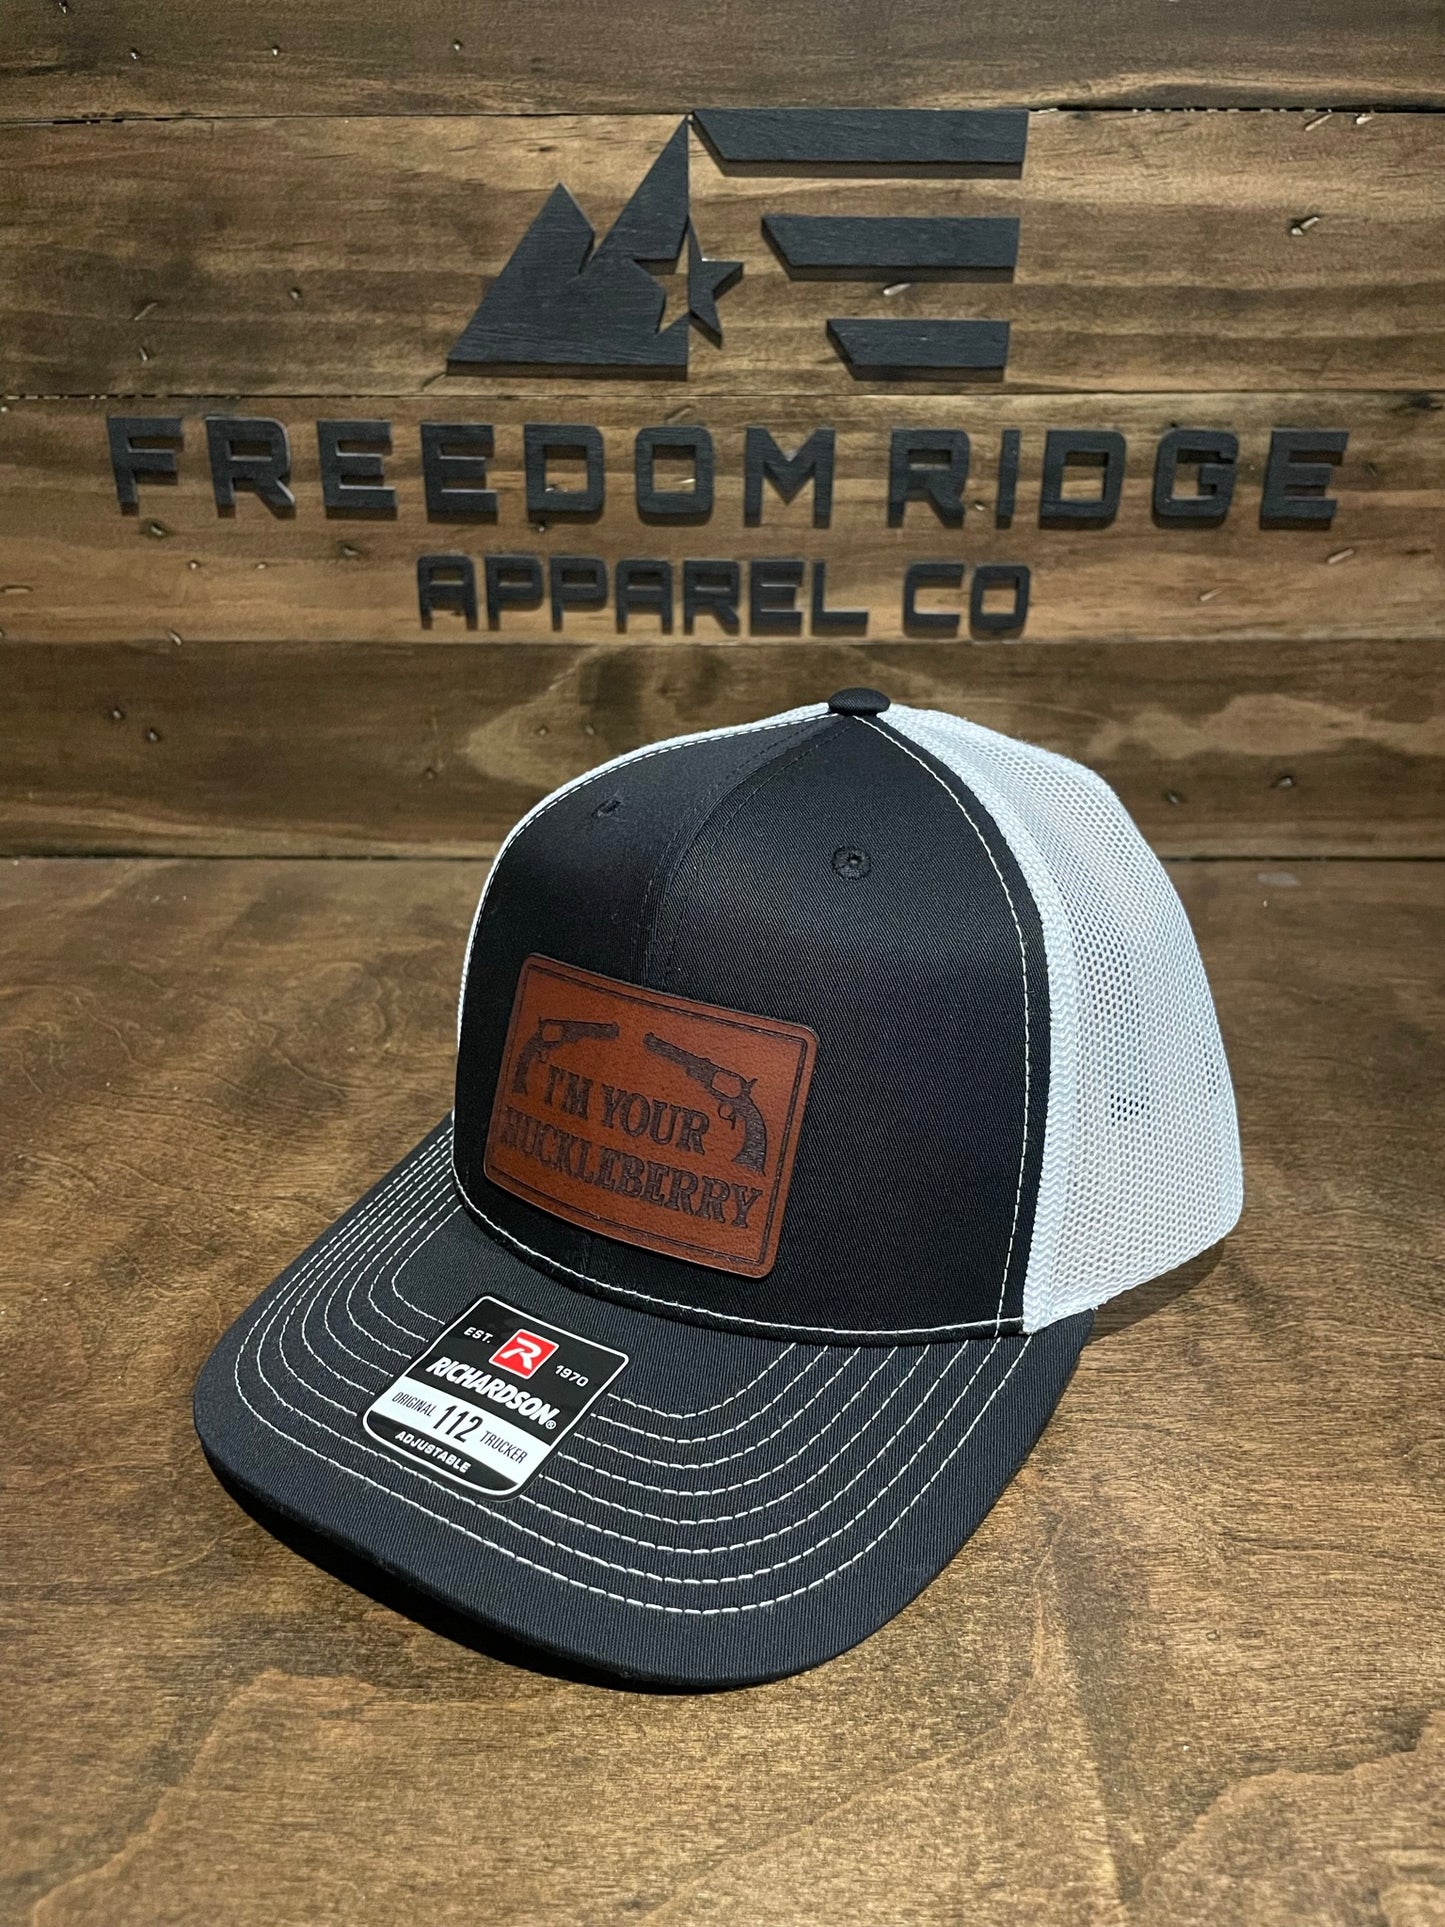 Richardson 112 Trucker Mesh SnapBack Hat